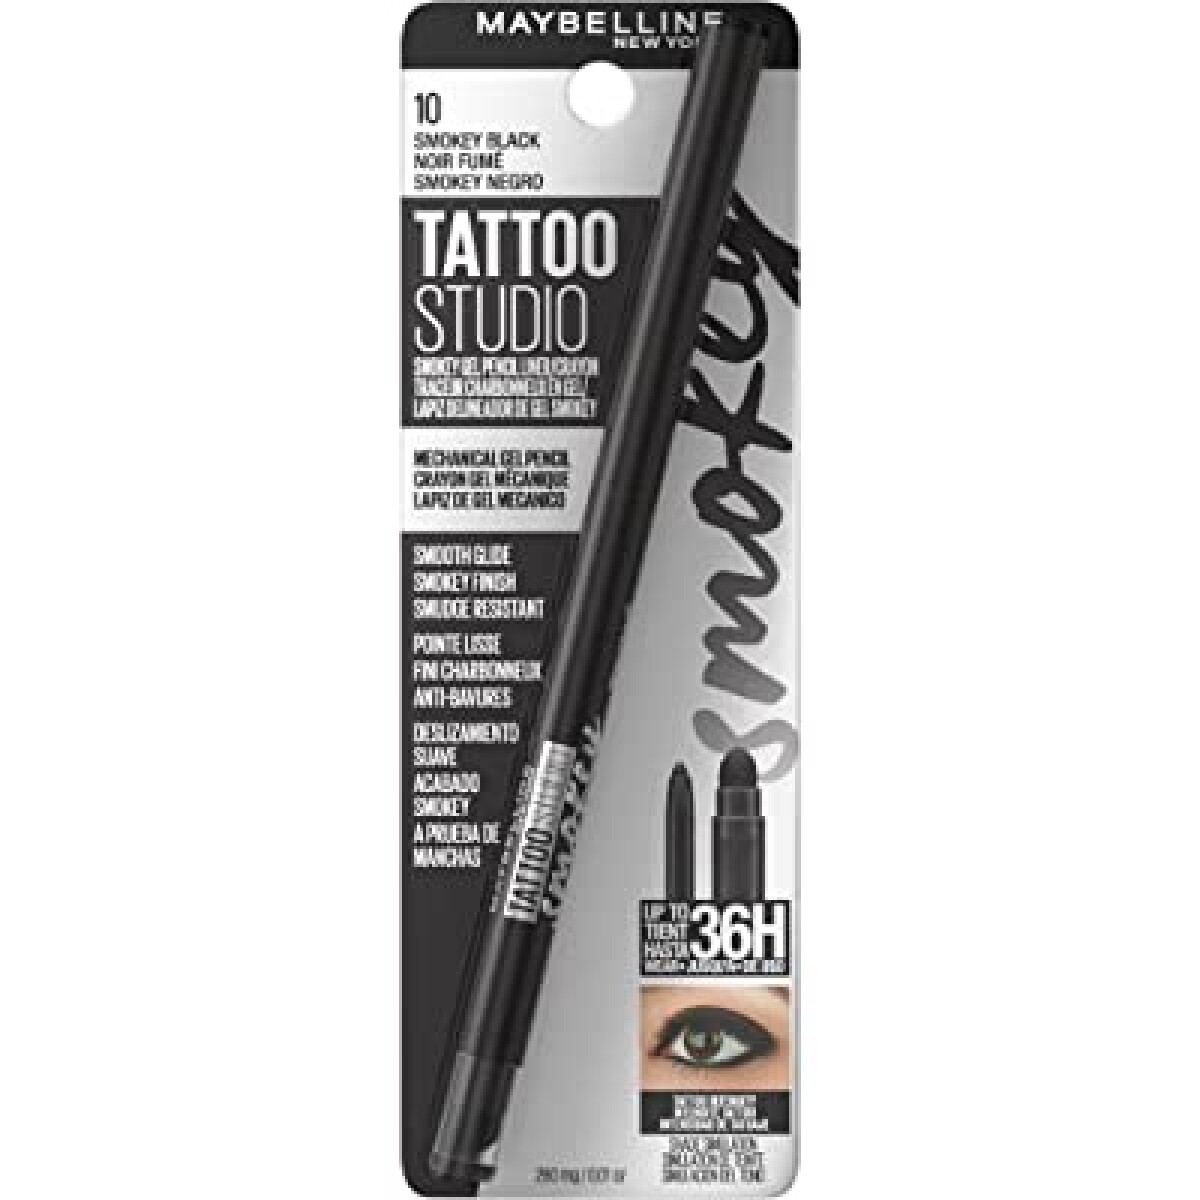 Maybelline Tattoo Studio 36H Lapiz Delineador De Gel Nº 10 Smokey Black 